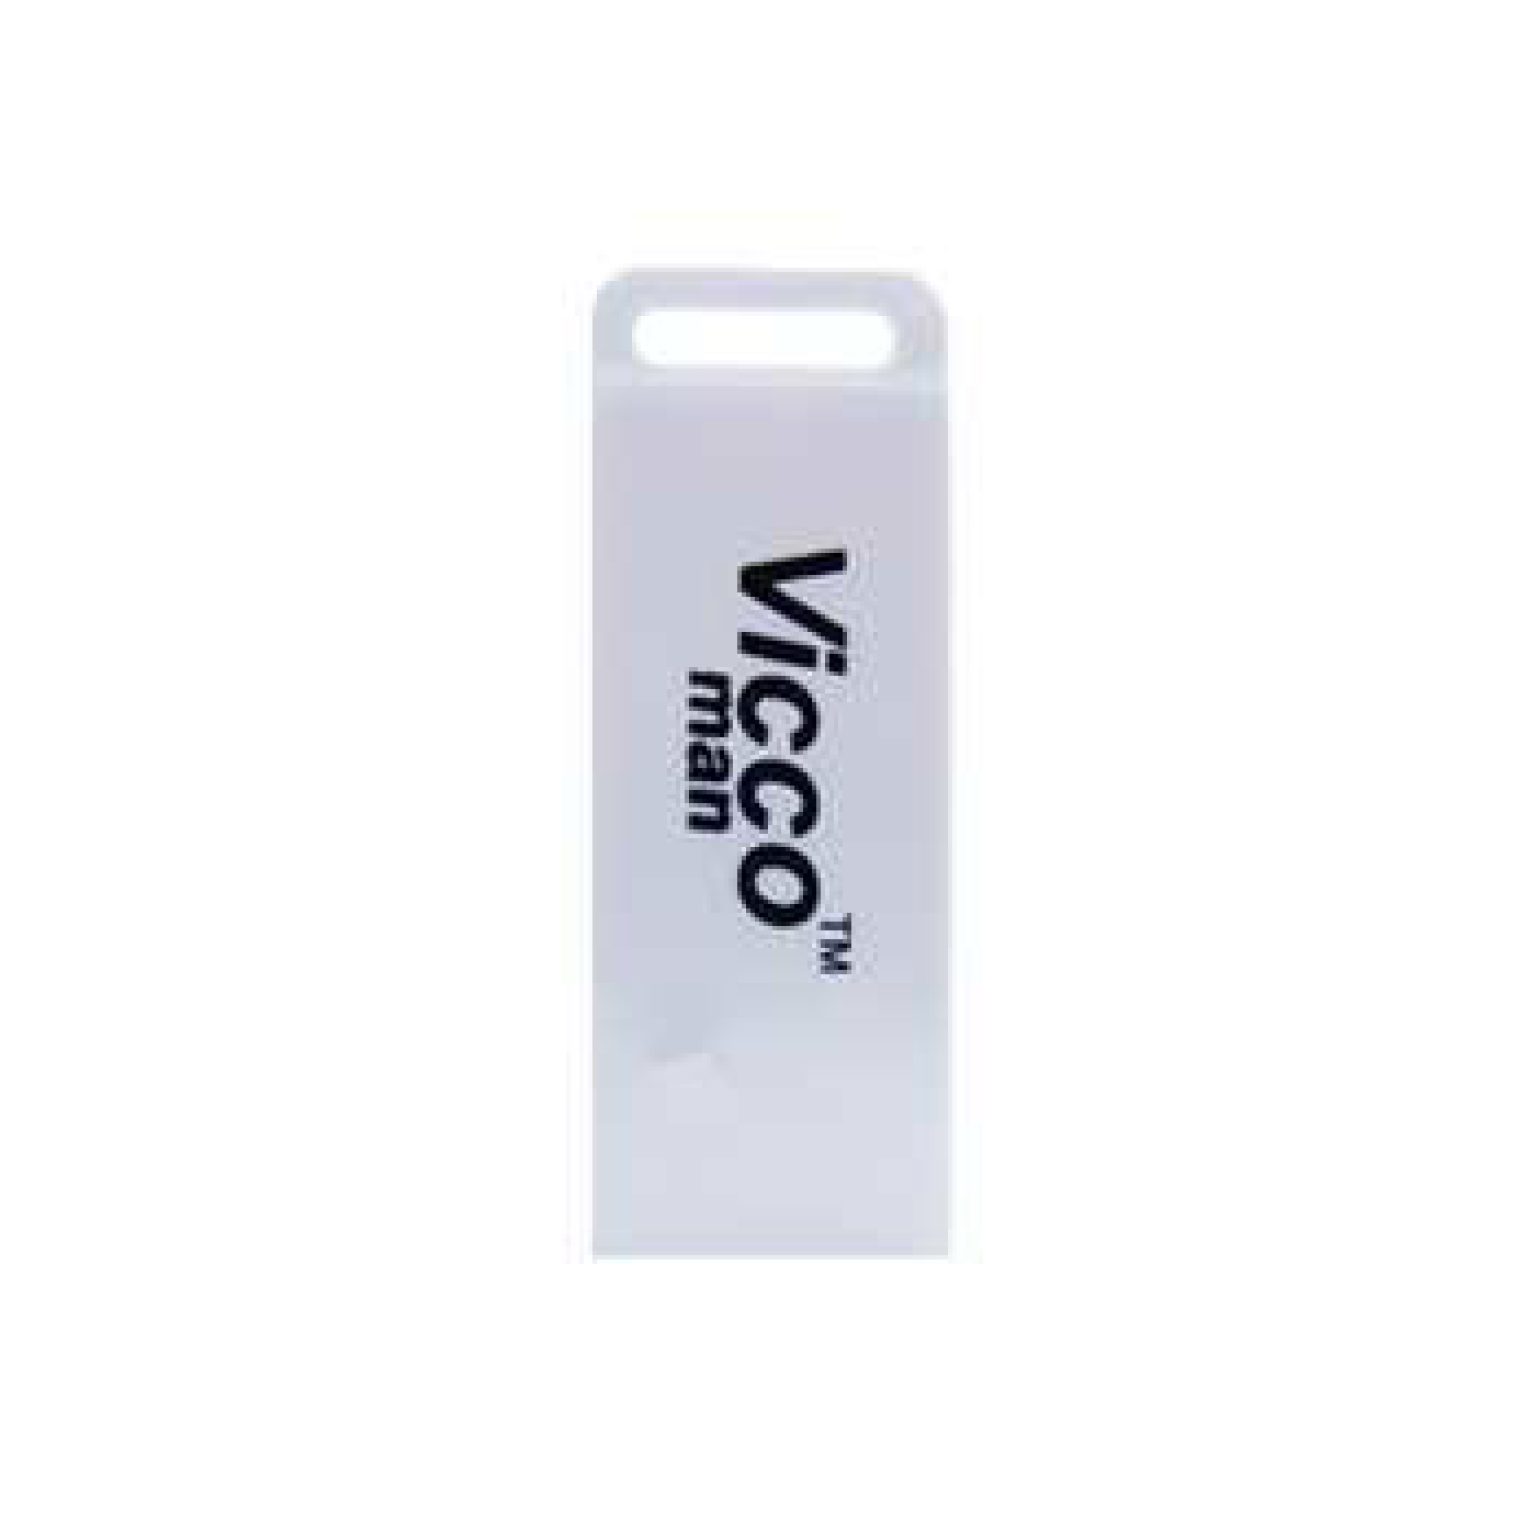 Viccoman VC230 32GB USB 2.0